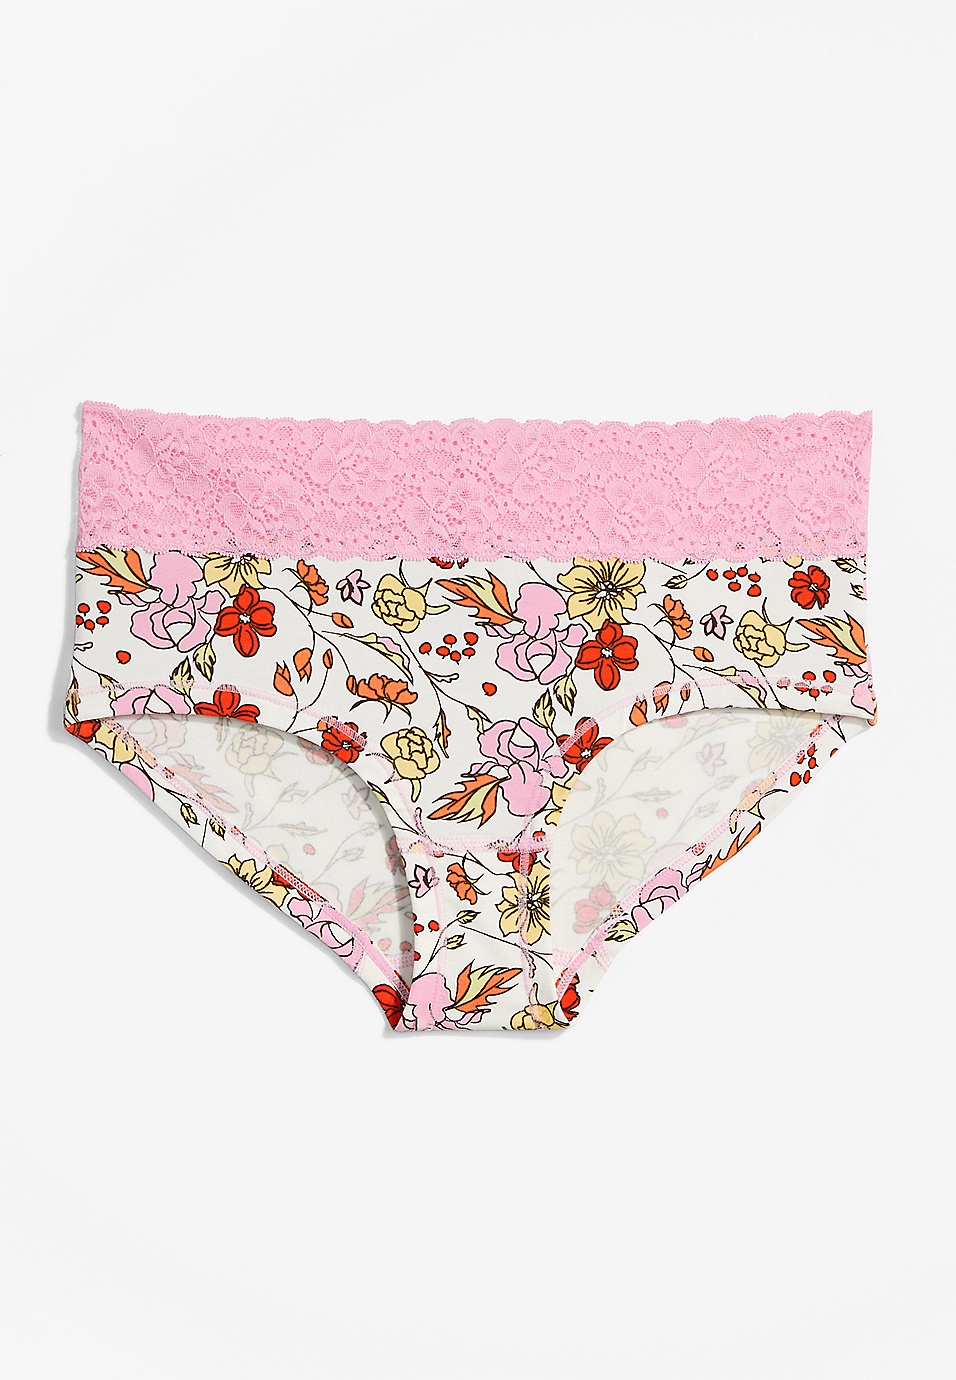 Simply Comfy Wide Lace Trim Floral Boybrief Cotton Panty